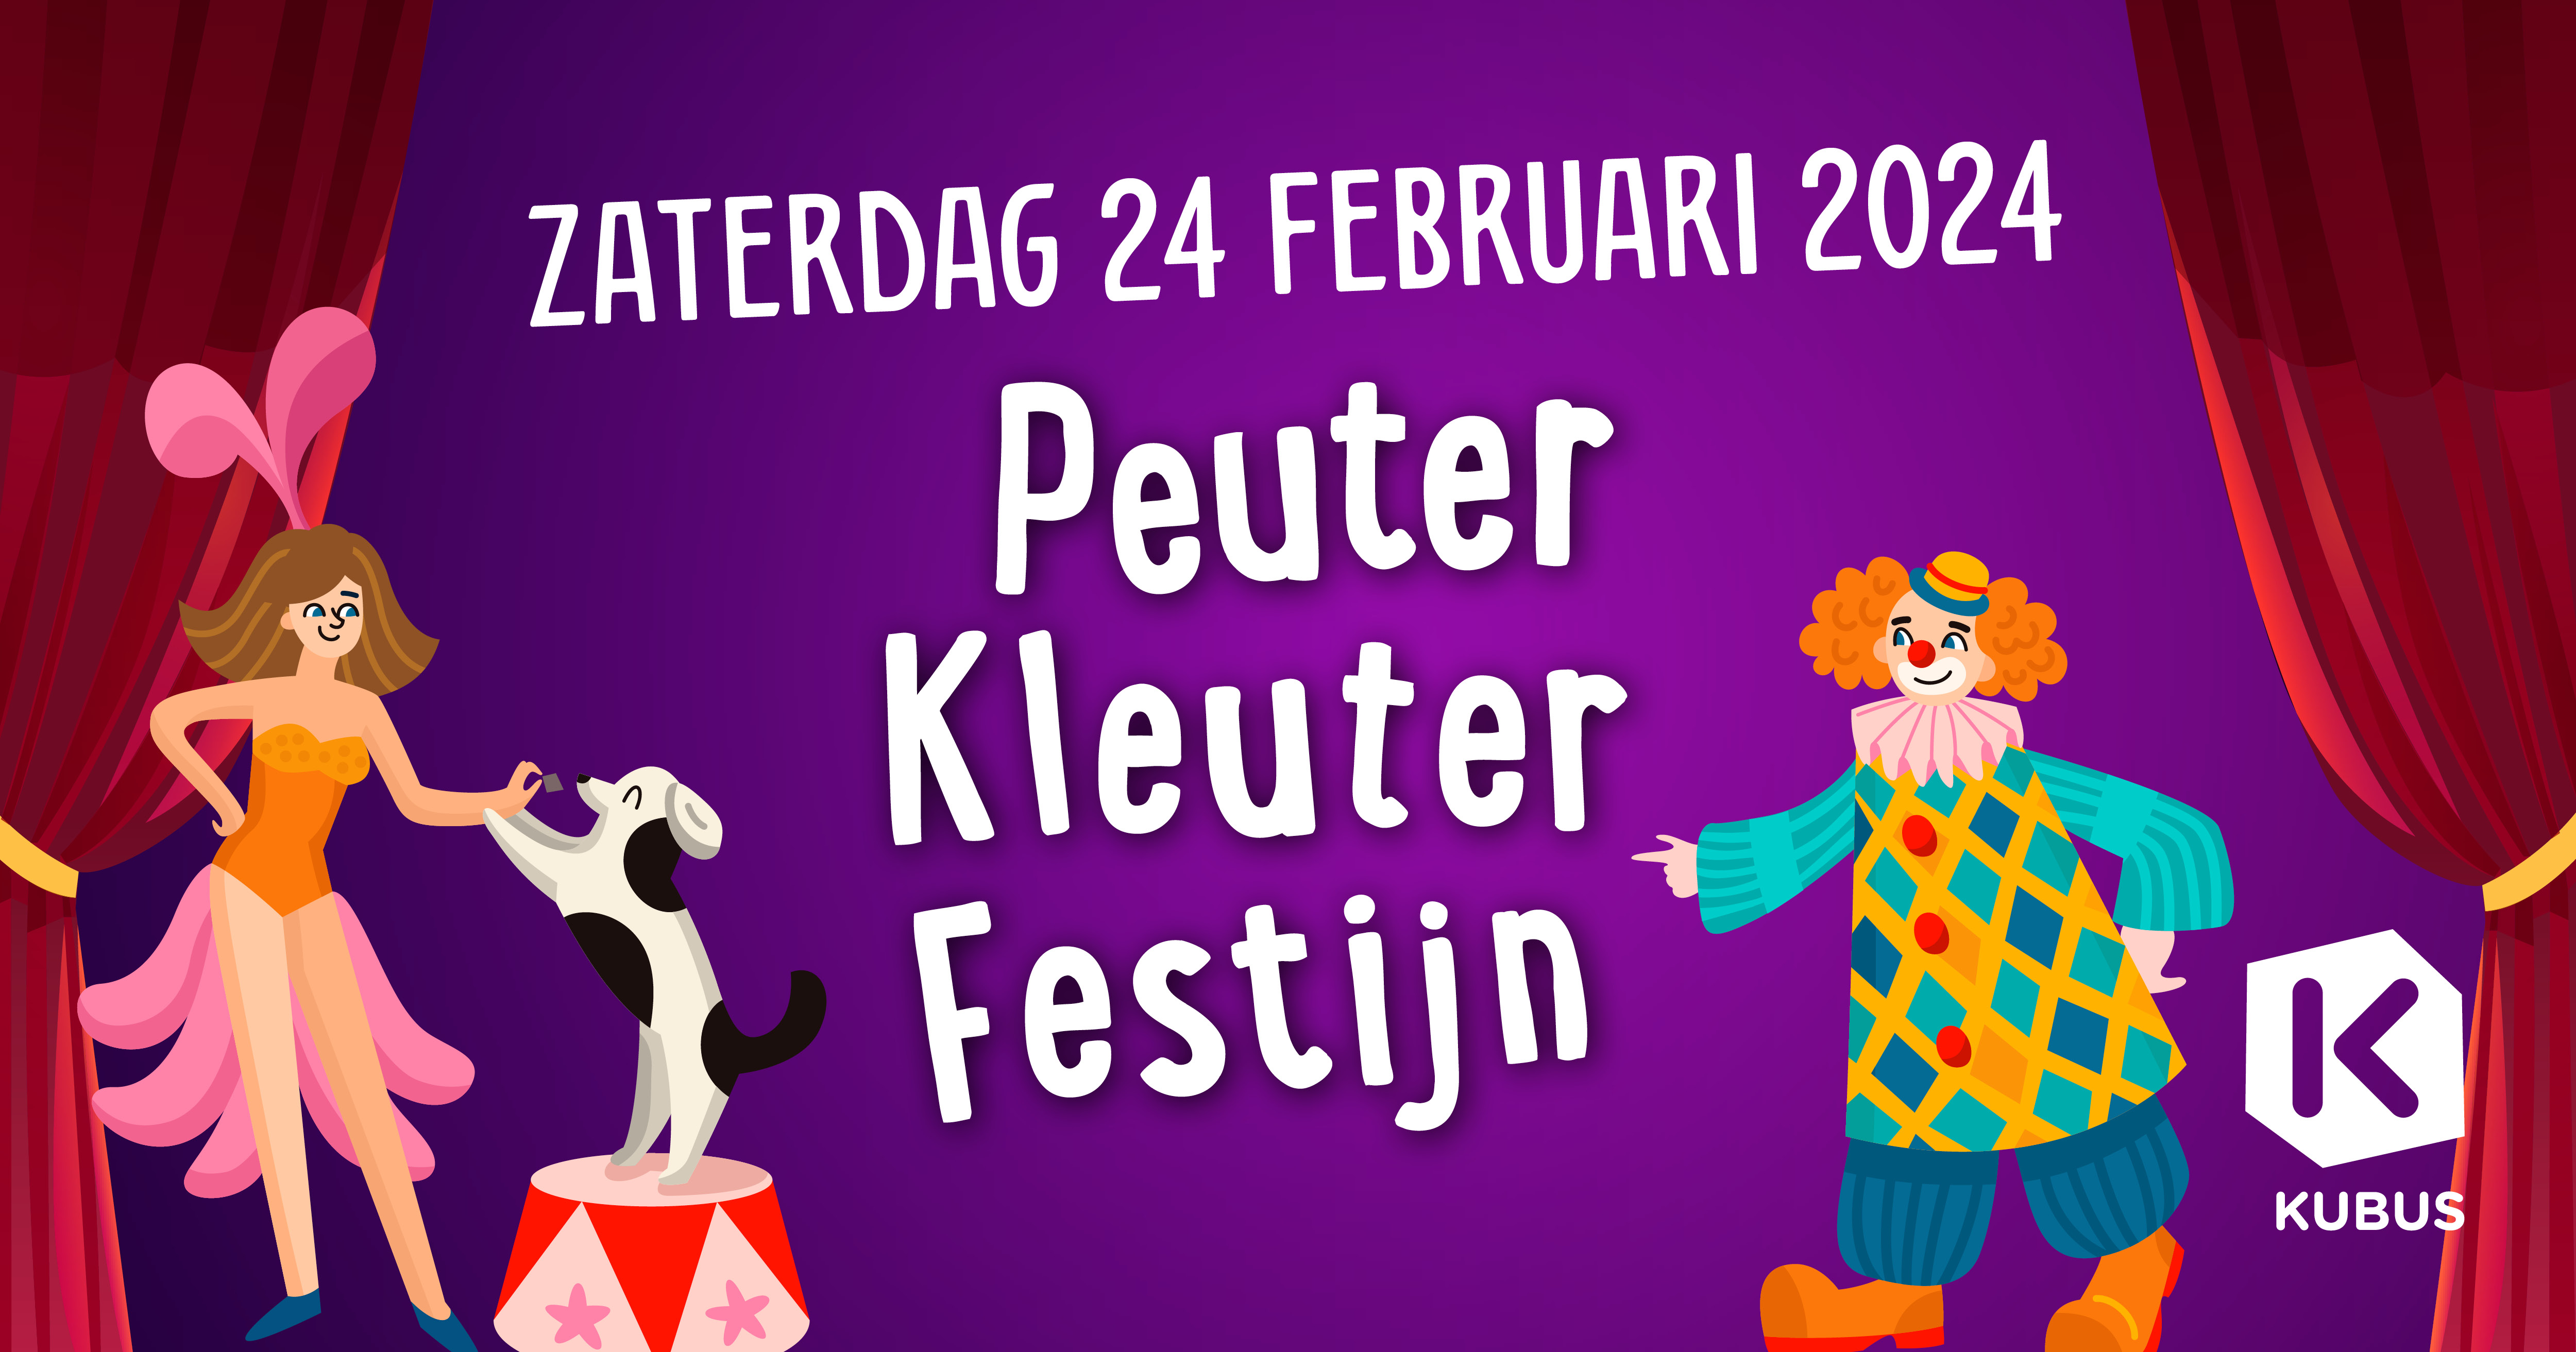 Peuter Kleuter Festijn in De Kubus, thema circus